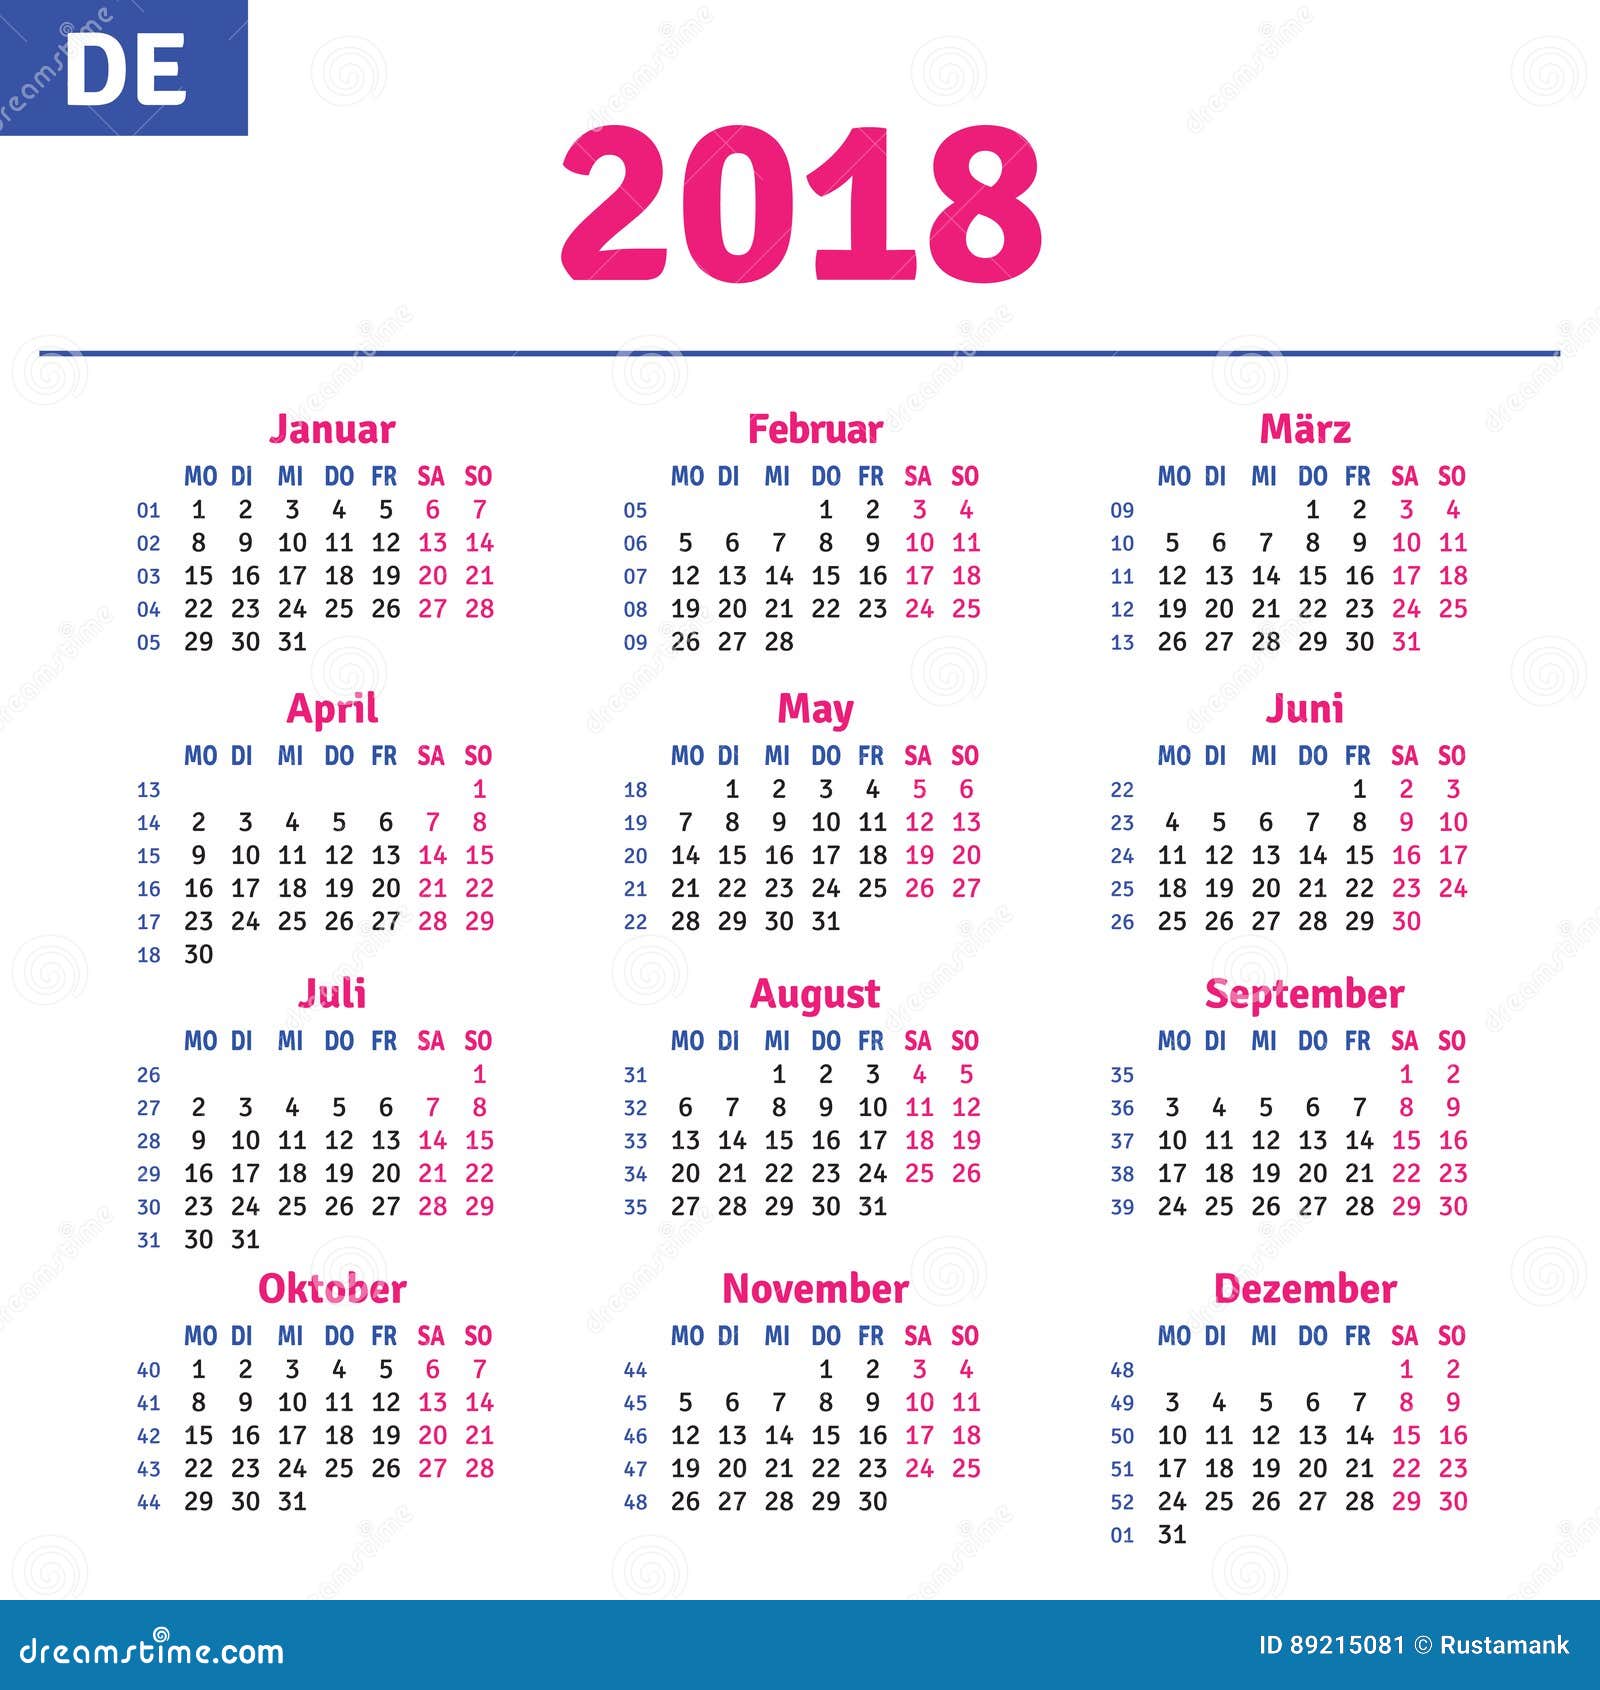 Duitse kalender 2018 vector illustratie. duitsland 89215081